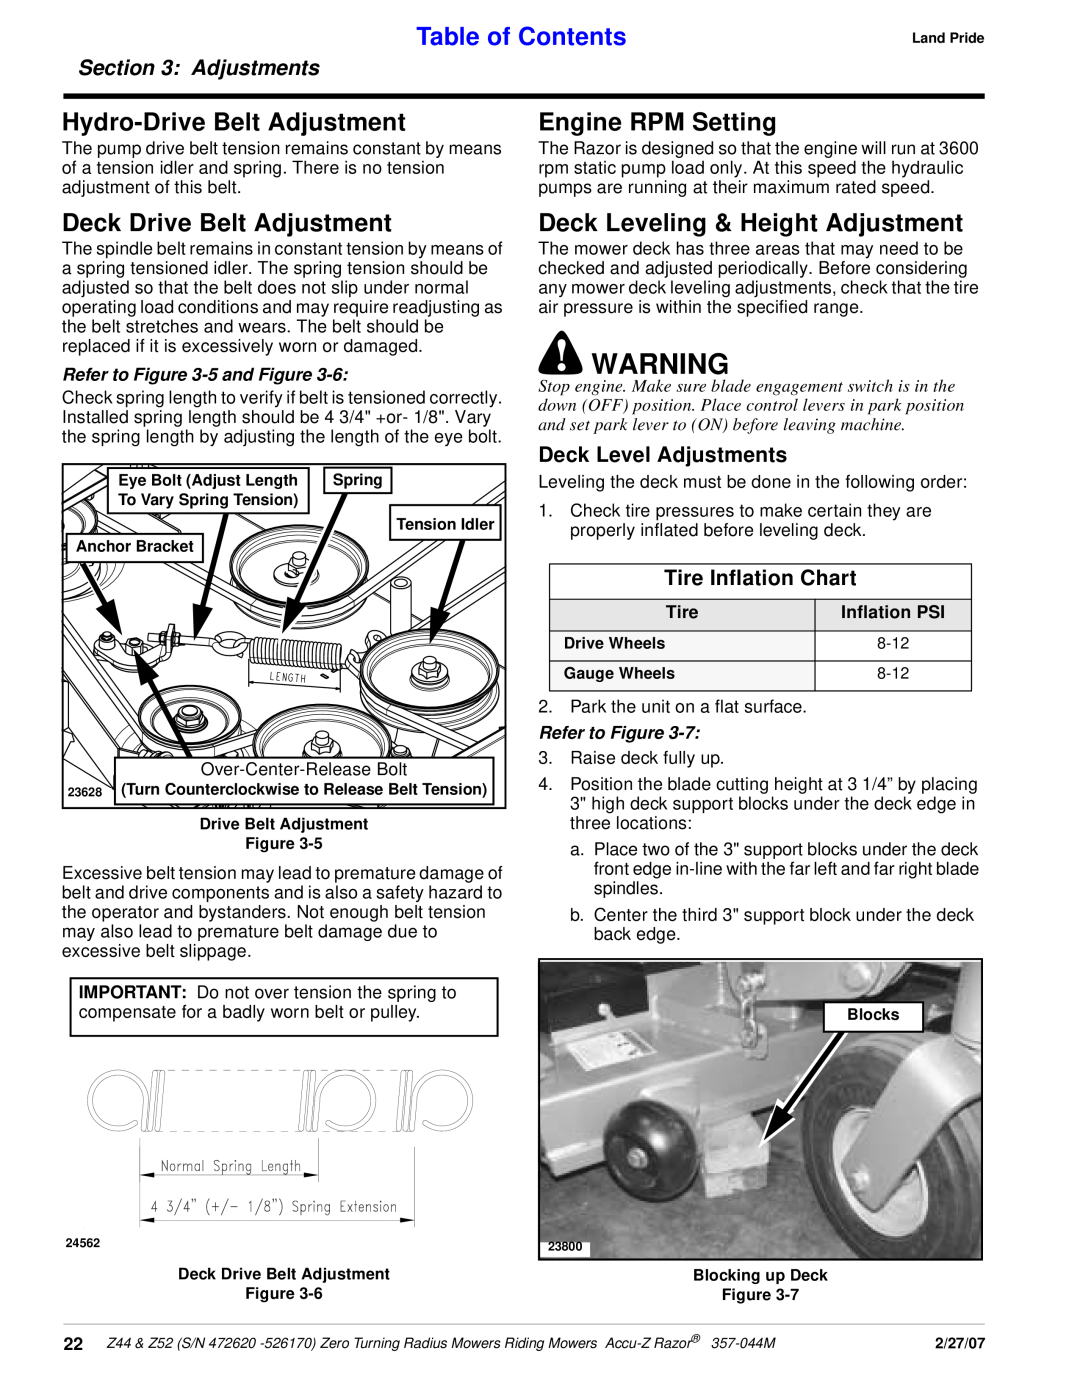 Land Pride 357-044M Hydro-Drive Belt Adjustment, Engine RPM Setting, Deck Drive Belt Adjustment, Deck Level Adjustments 